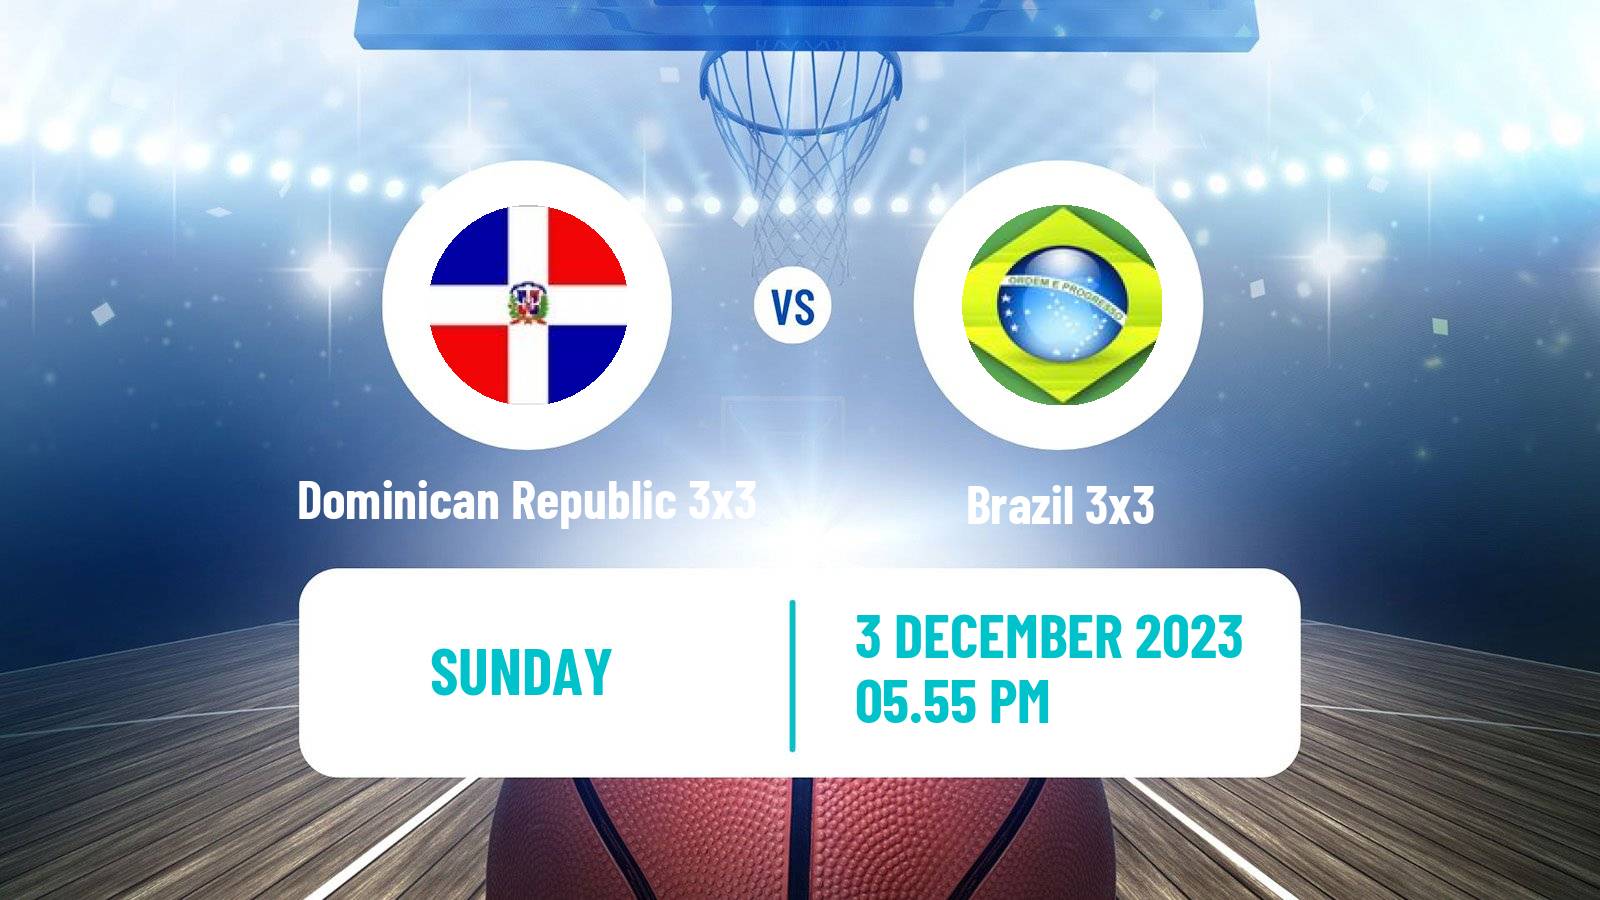 Basketball Americup 3x3 Dominican Republic 3x3 - Brazil 3x3